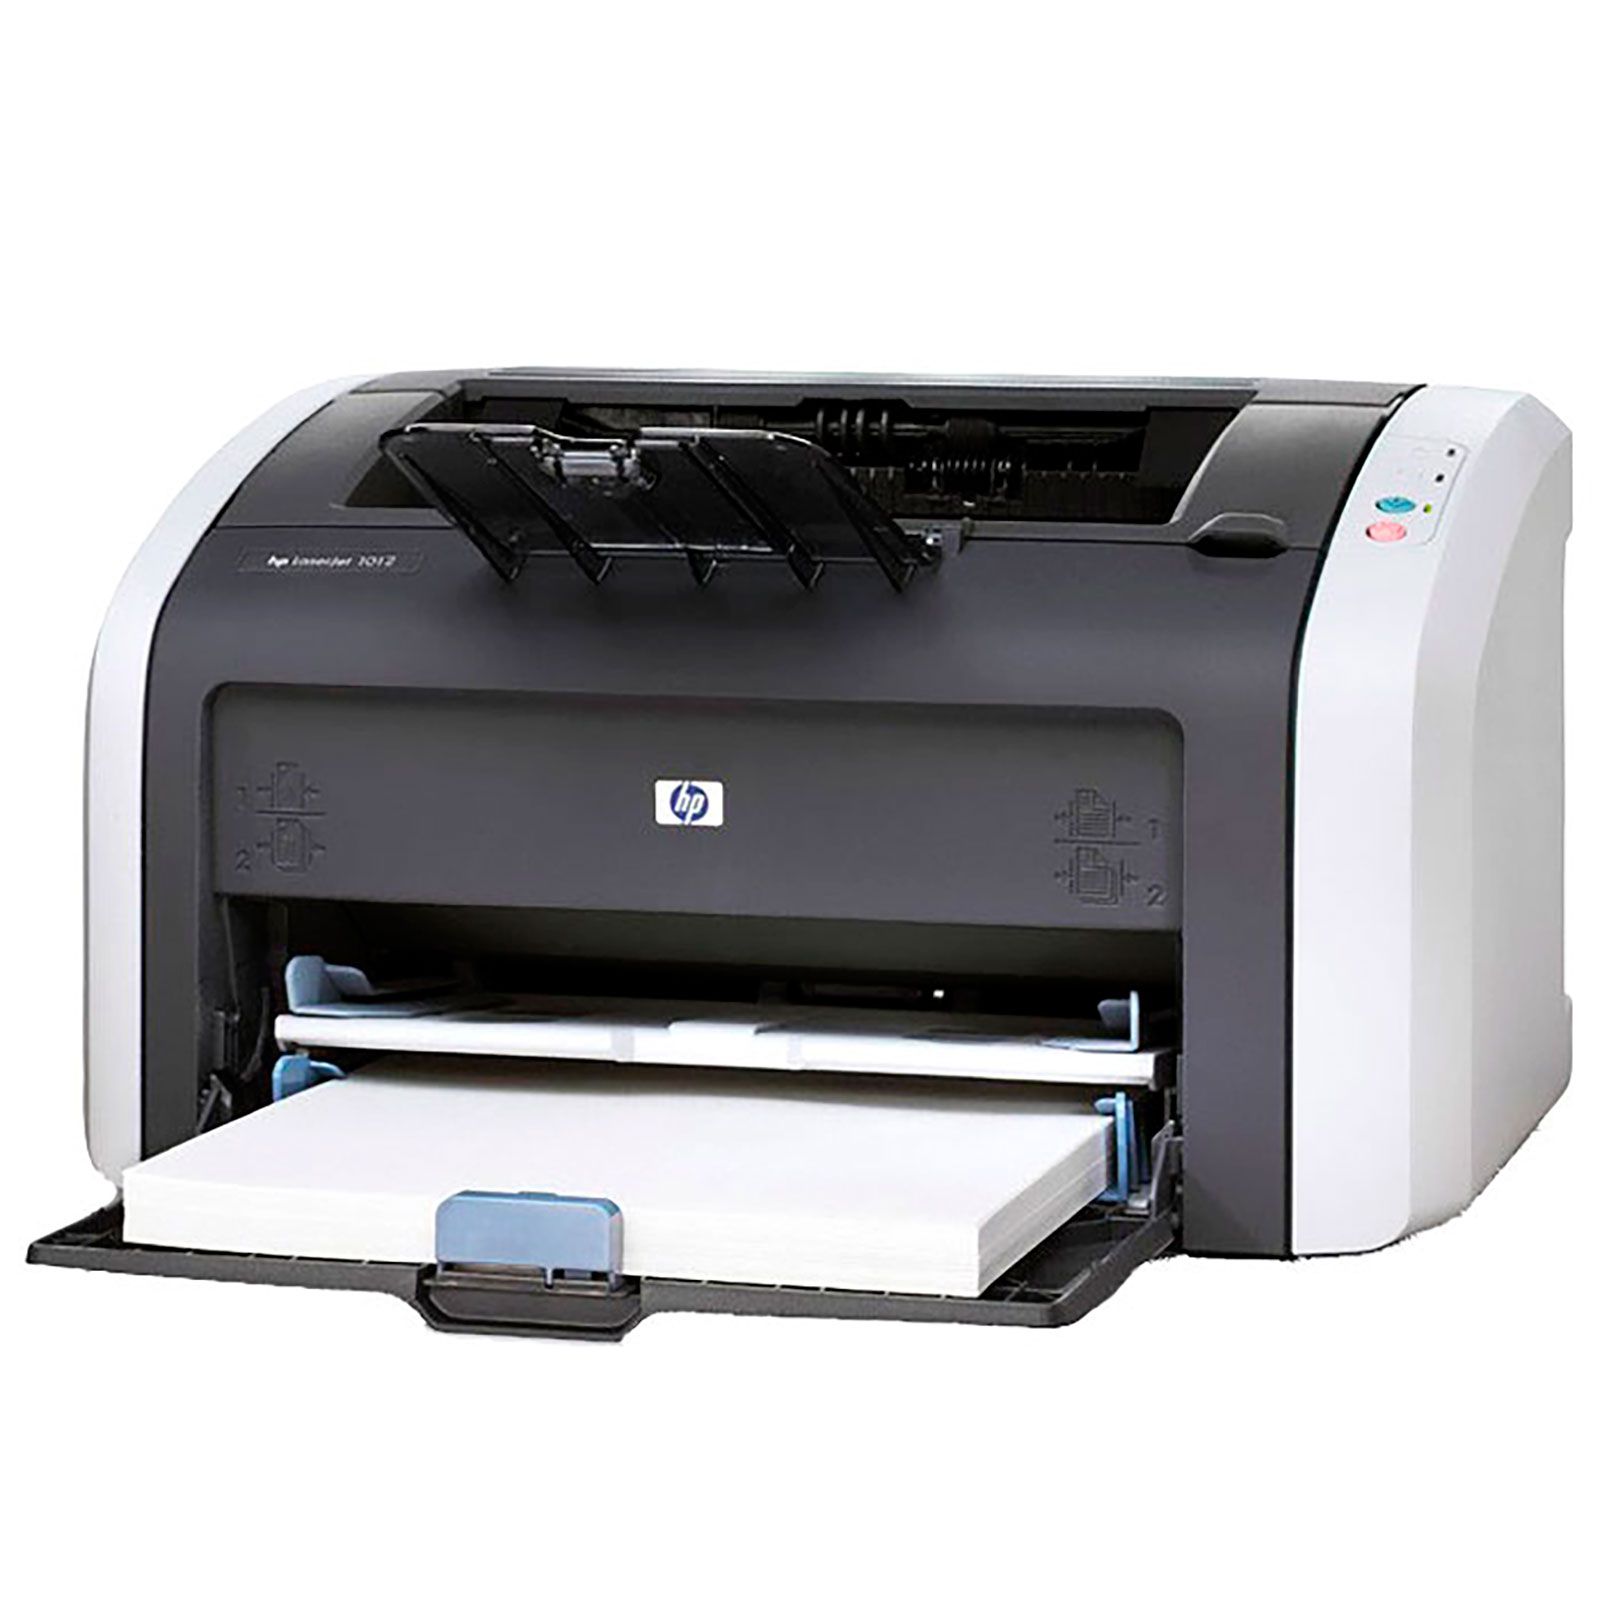 Hp laserjet 1010 printer driver